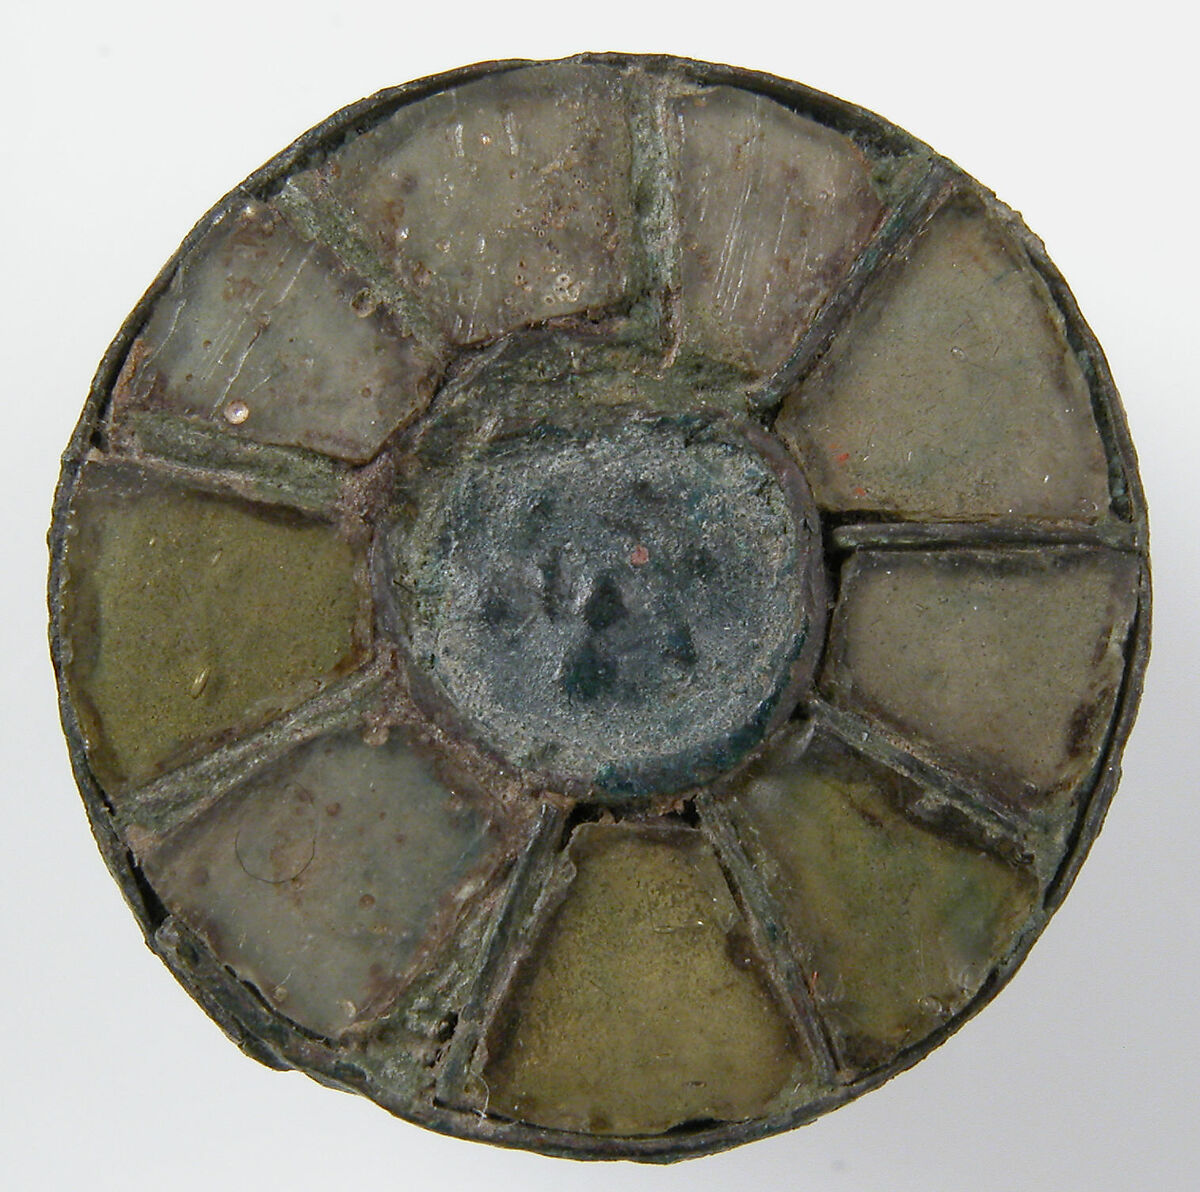 Disk Brooch, Copper alloy, glass paste, Frankish 